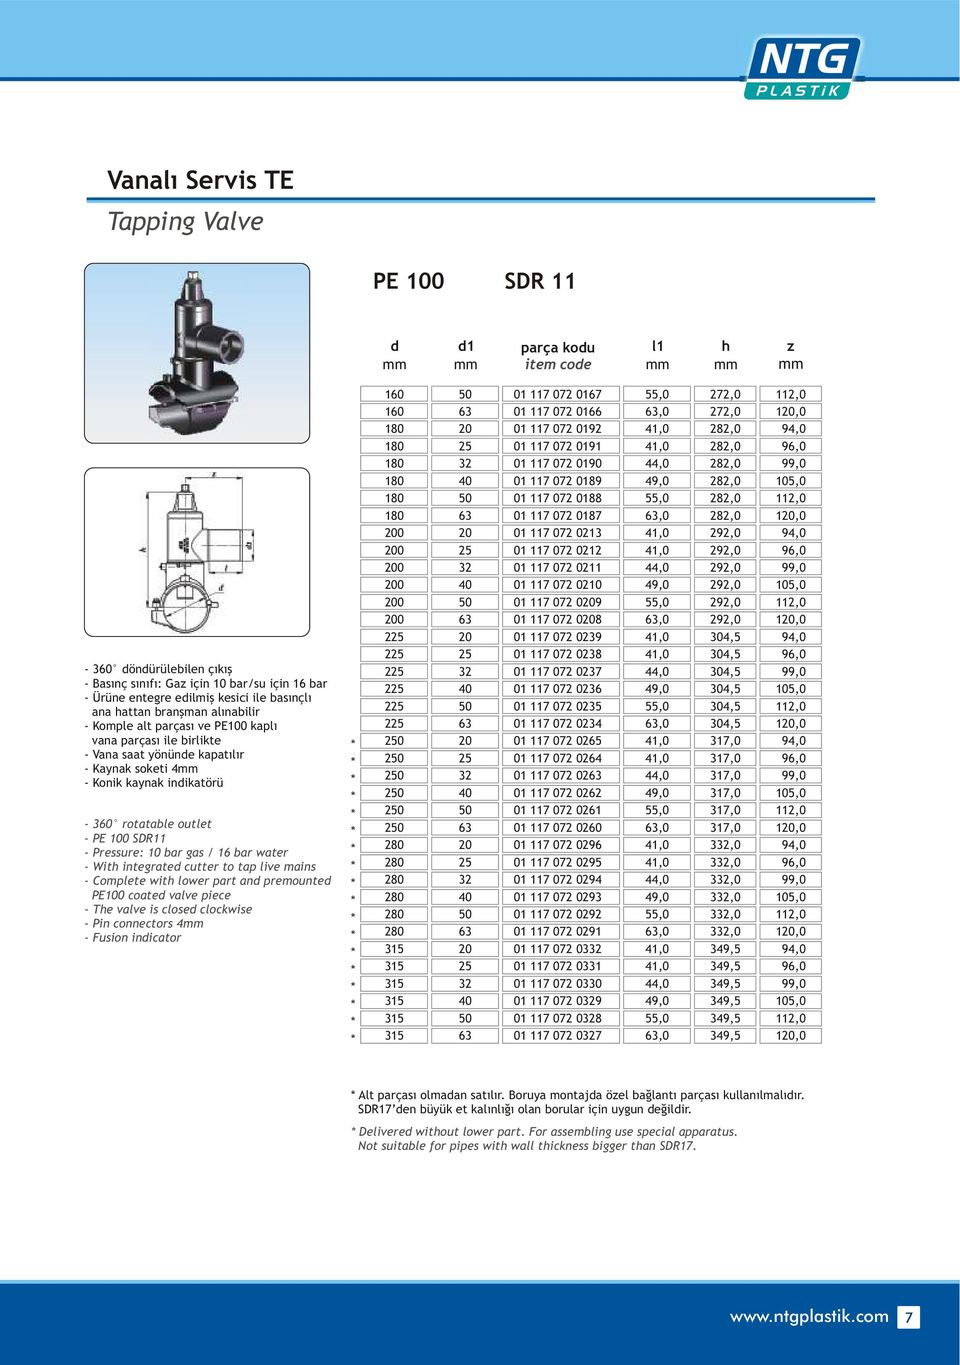 wit lower part an premounte PE100 coate valve piece - Te valve is close clockwise - Pin connectors 4 - Fusion inicator 0 0 0 0 0 0 2 2 2 2 2 2 2 2 2 2 2 2 01 117 072 0167 01 117 072 0166 01 117 072